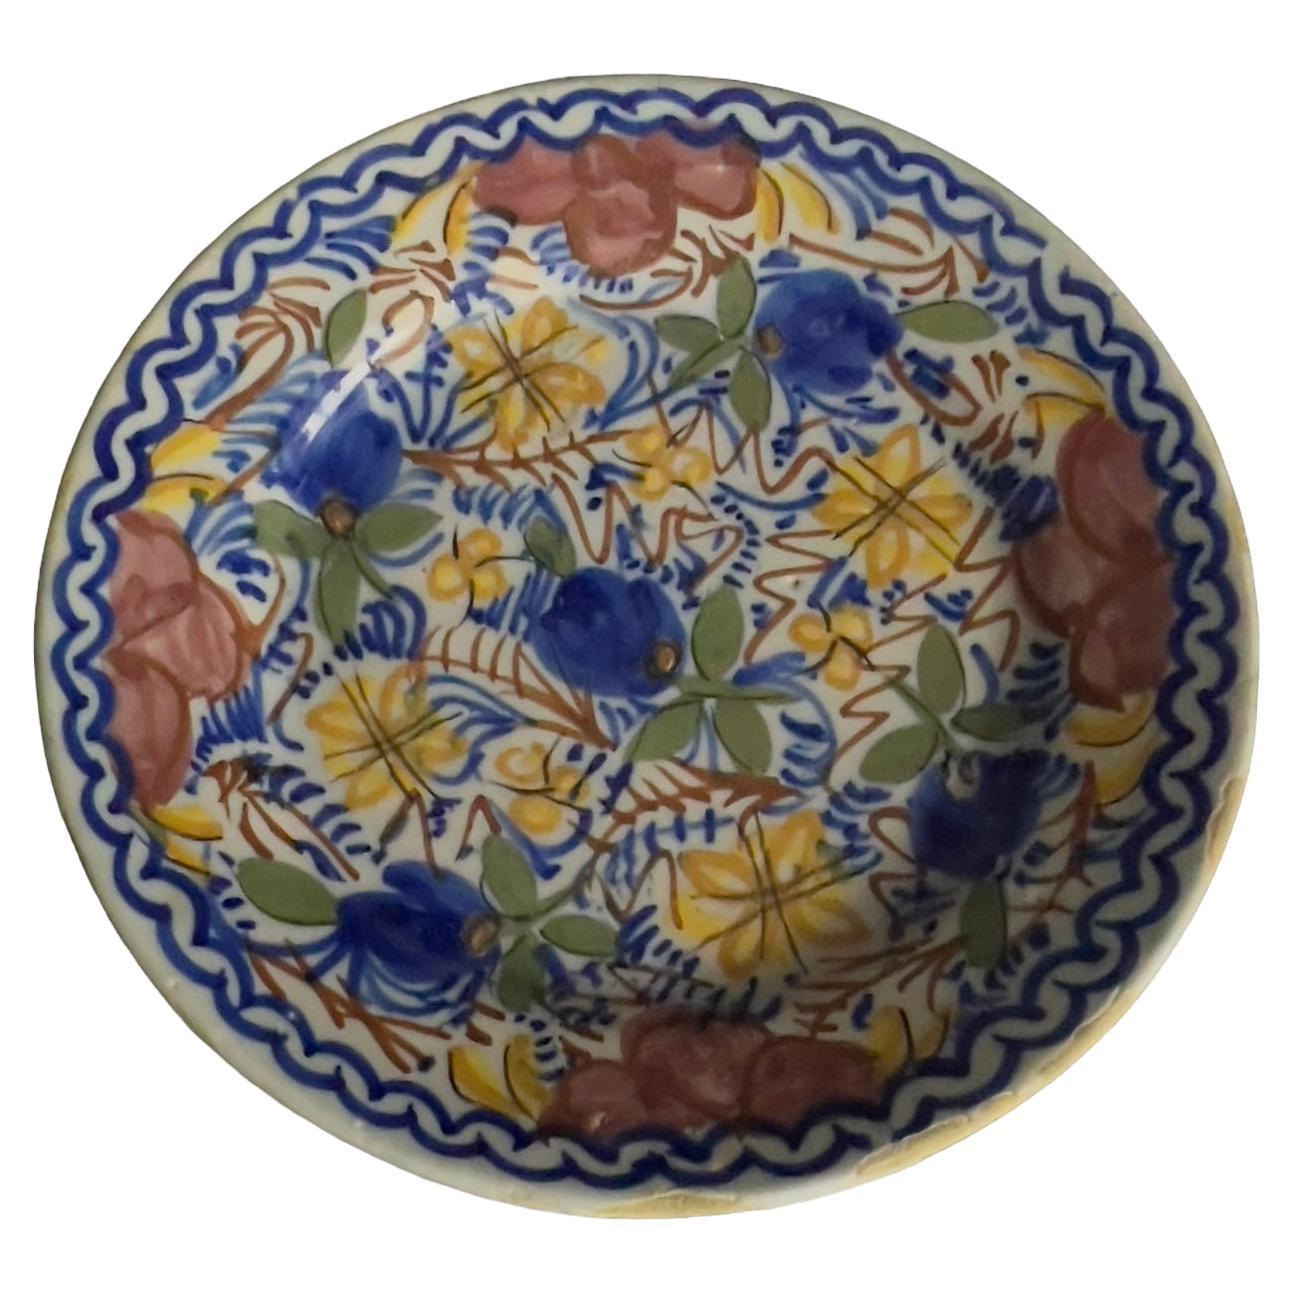 Spanish Ceramic Plate